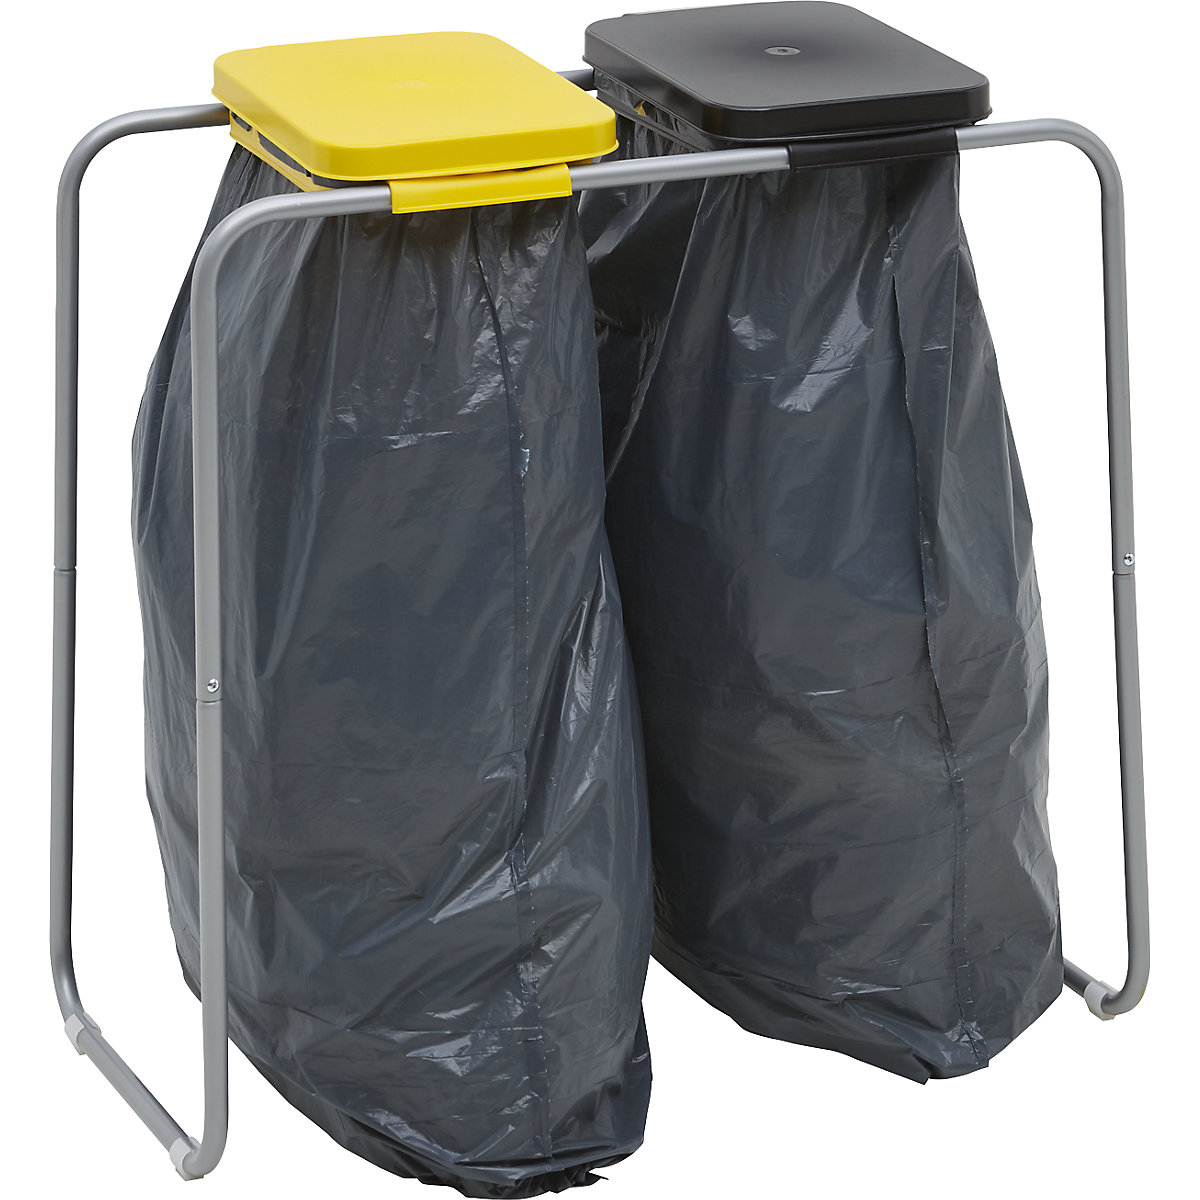 Porta-sacchi per rifiuti – eurokraft basic: per capacità max. 2 x 120 l,  telaio fisso